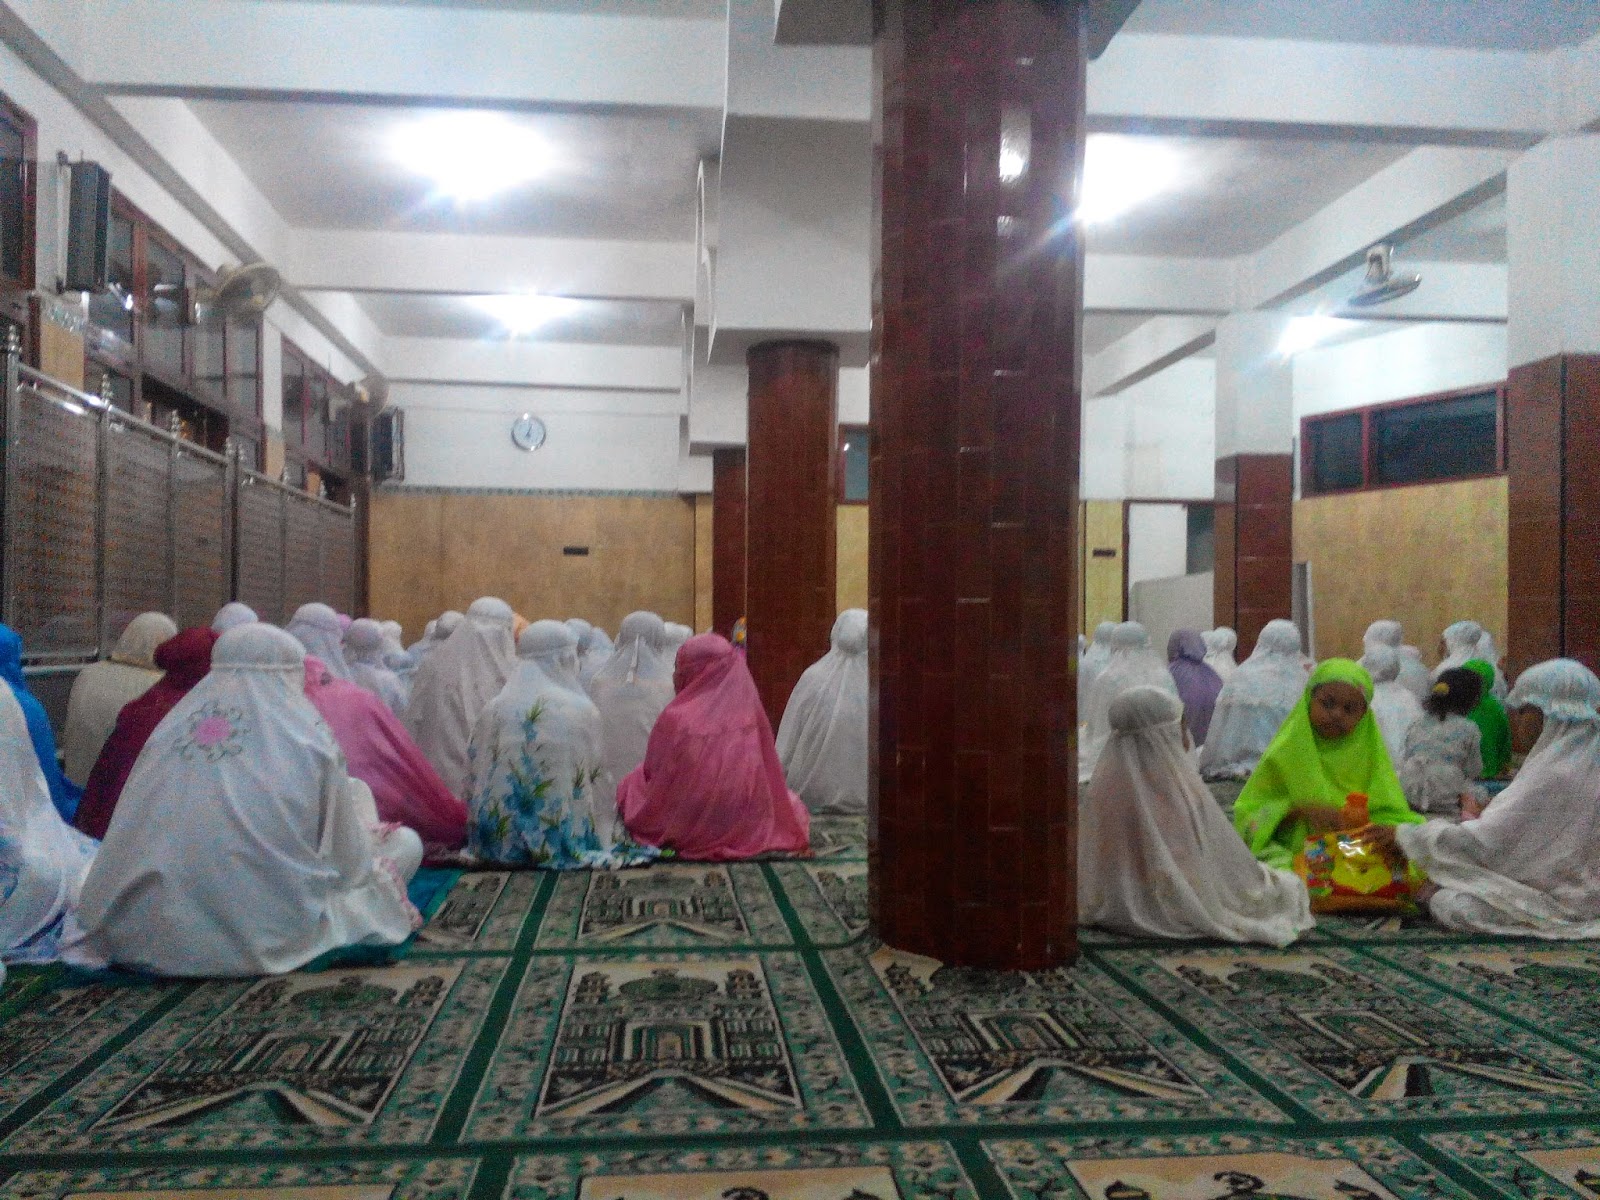 Wanita Shalat Di Masjid Atau Dirumah - Info Terkait Rumah